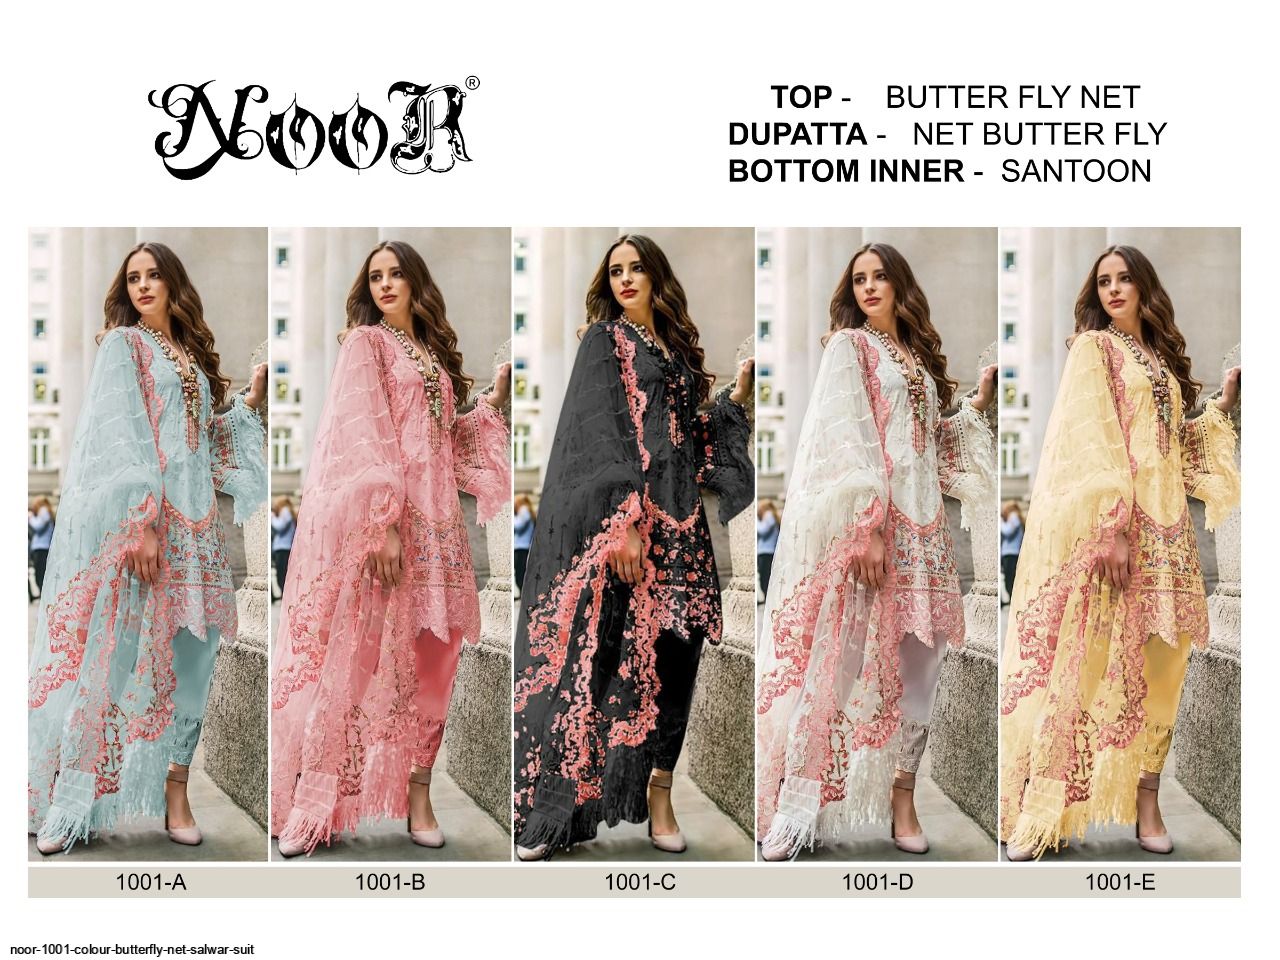 Noor 1001 Colour Butterfly Net Salwar Suit